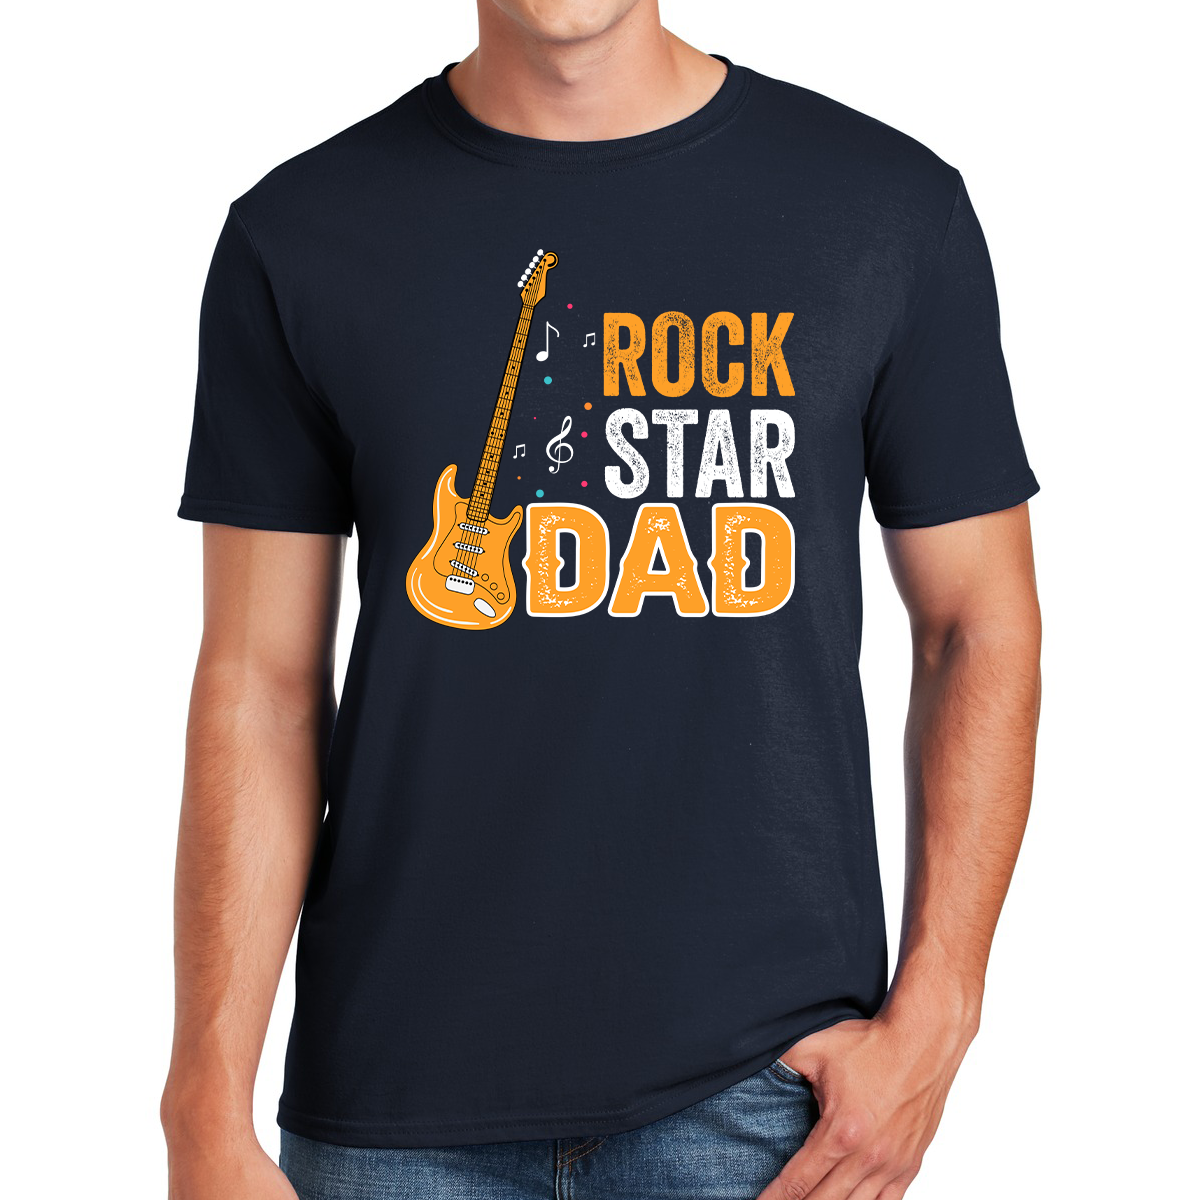 Rock Star Dad Shredding Fatherhood With Style Awesome Dad T-shirt